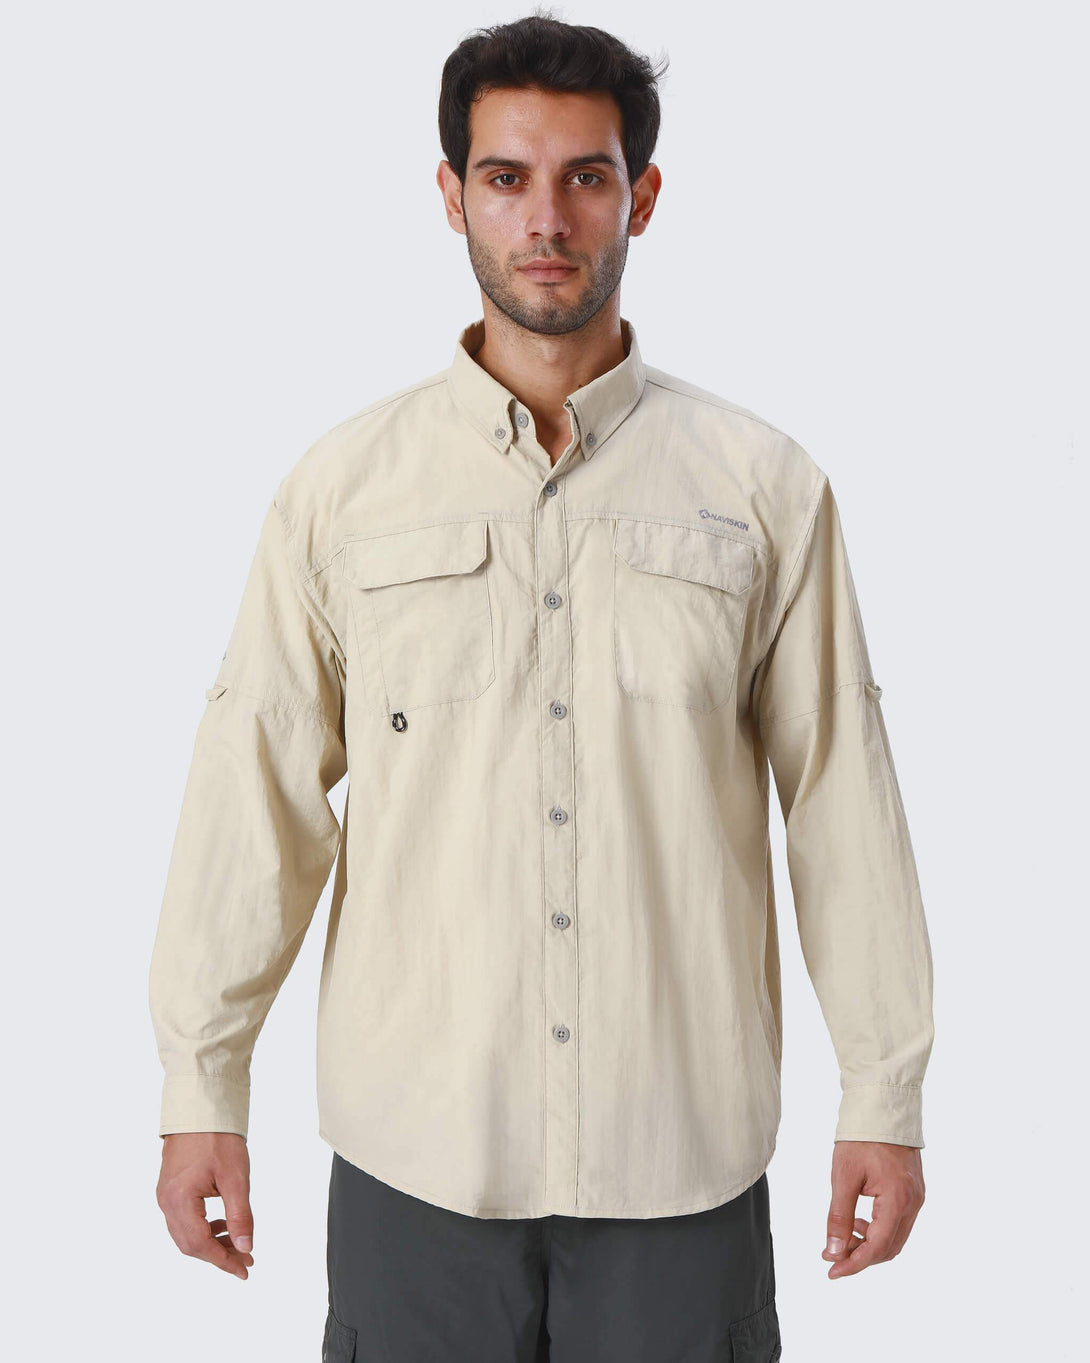 NAVISKIN Mens Sun Protection Fishing Shirts UPF 50 Long Sleeve Sun Shirts for Men PFG Hiking Travel Shirts Khaki Size XXL